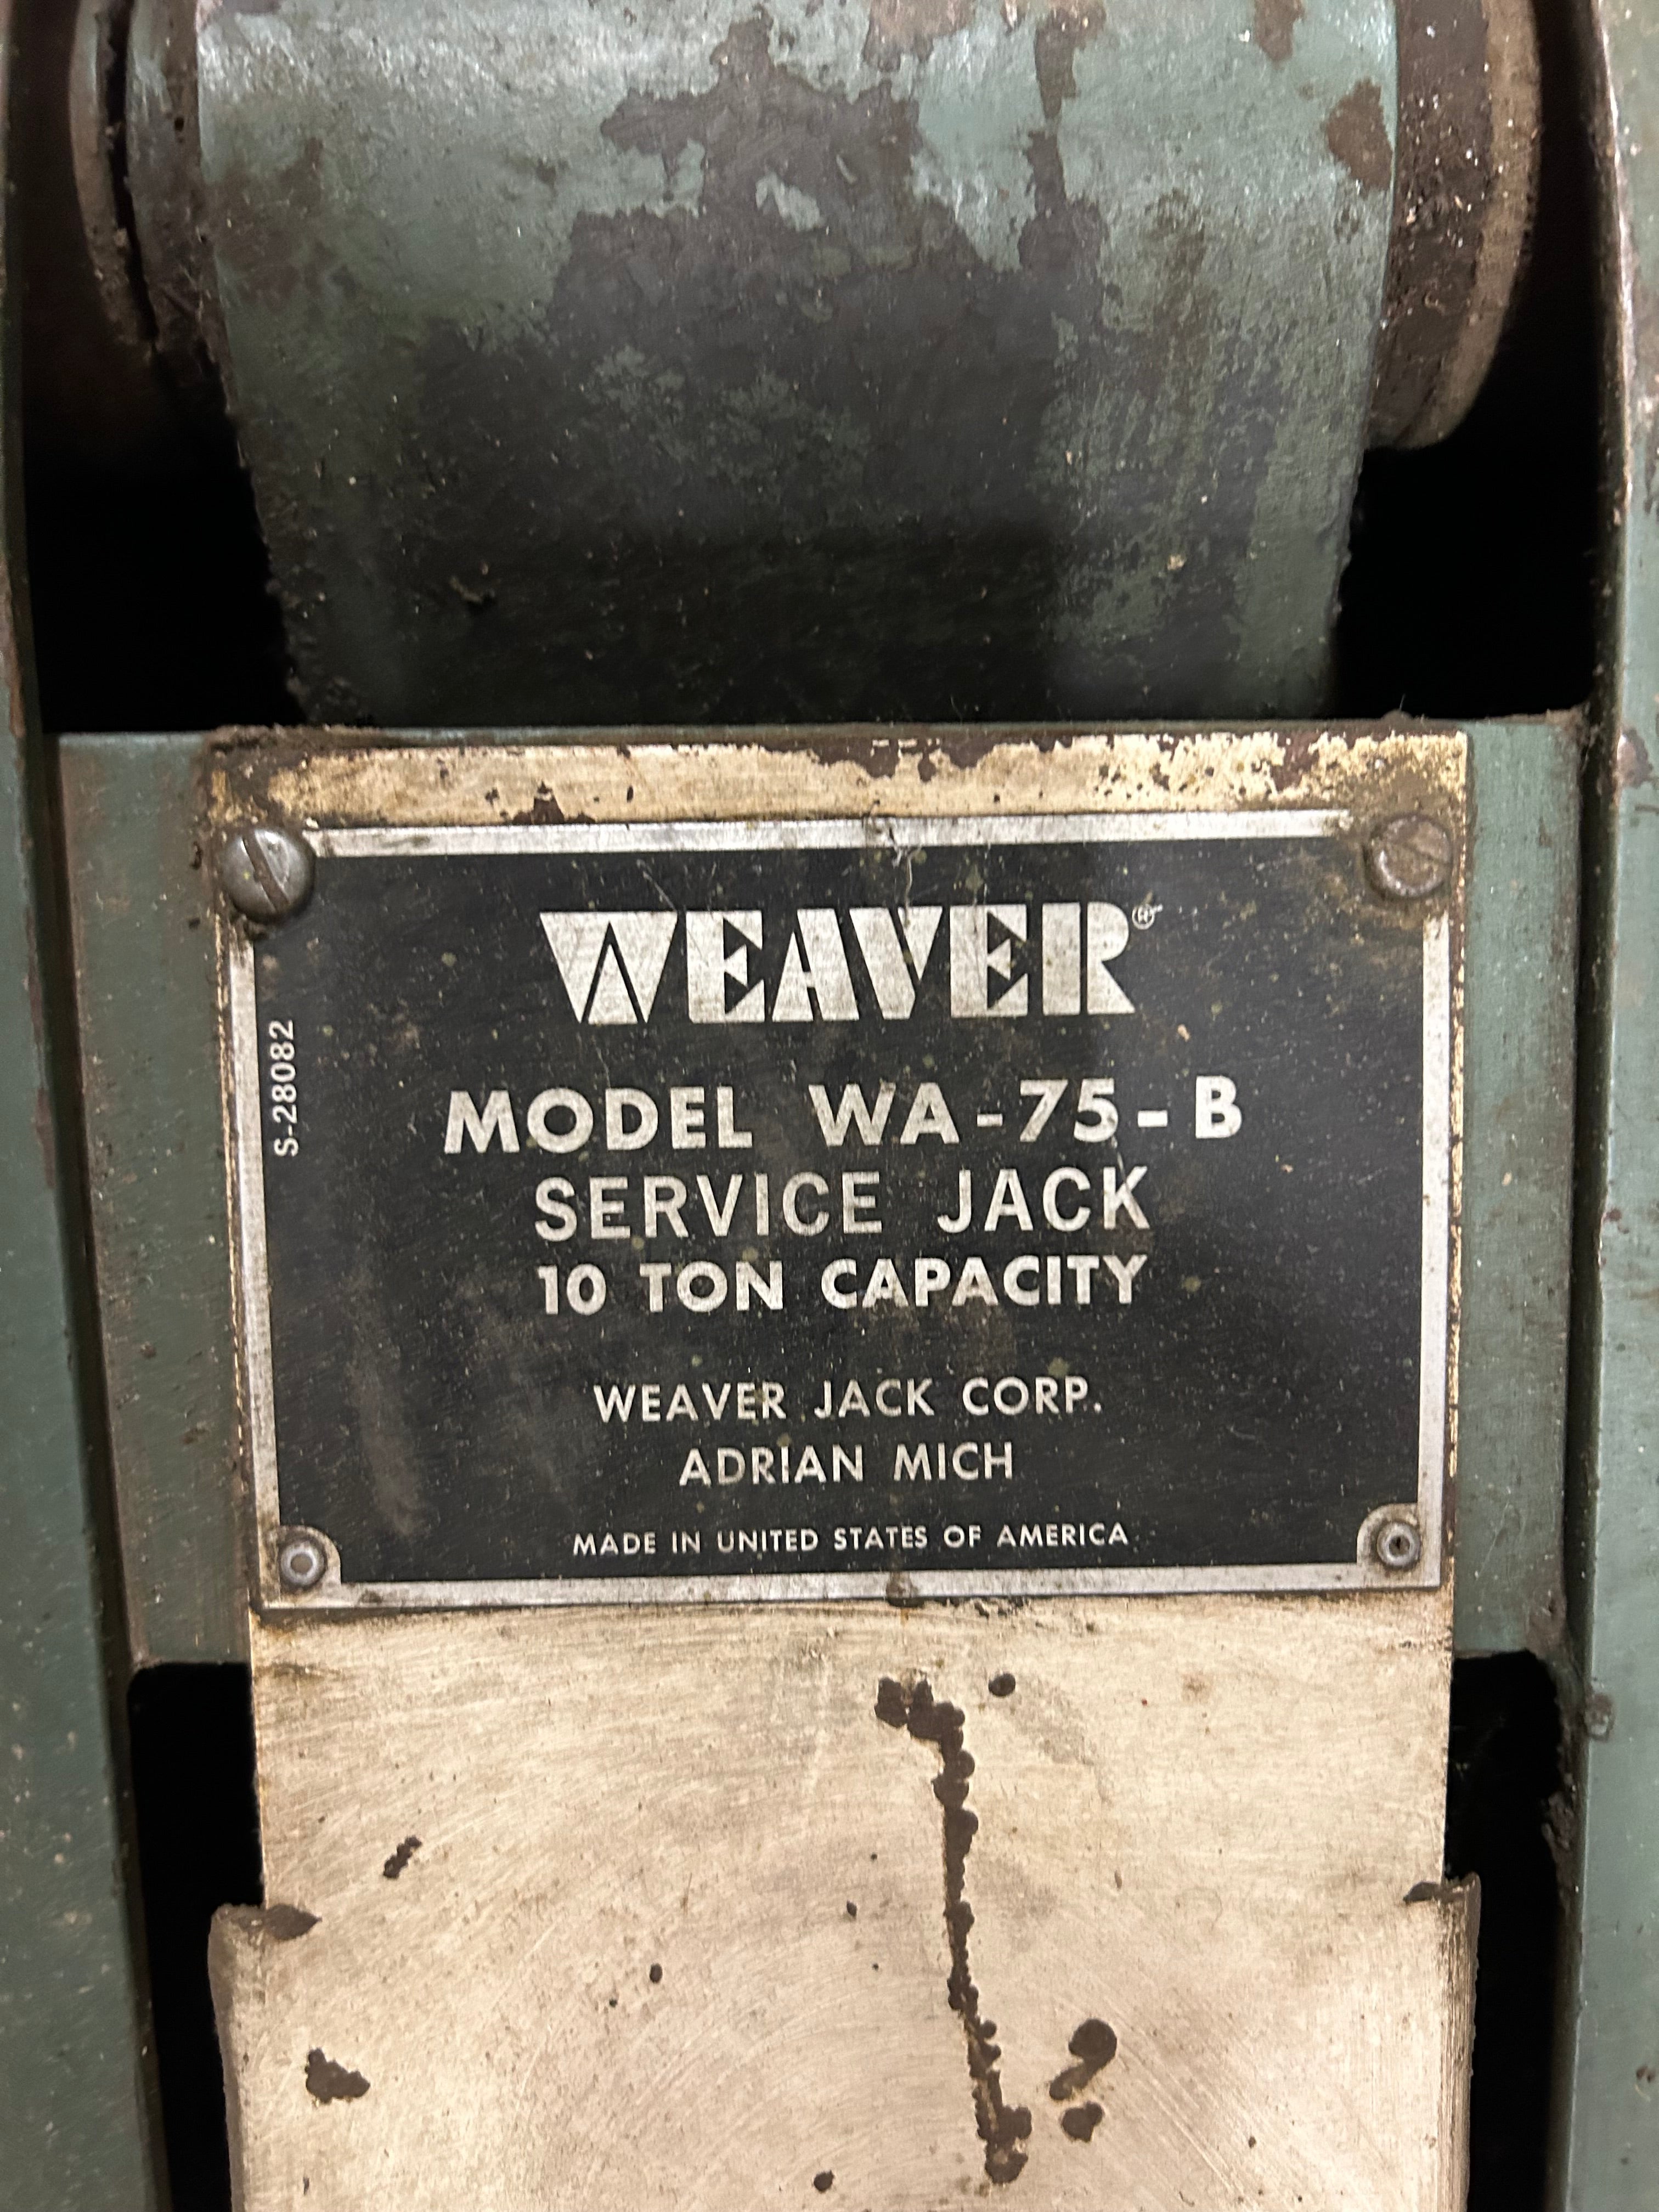 Weaver Service Jack 10 Ton Capacity